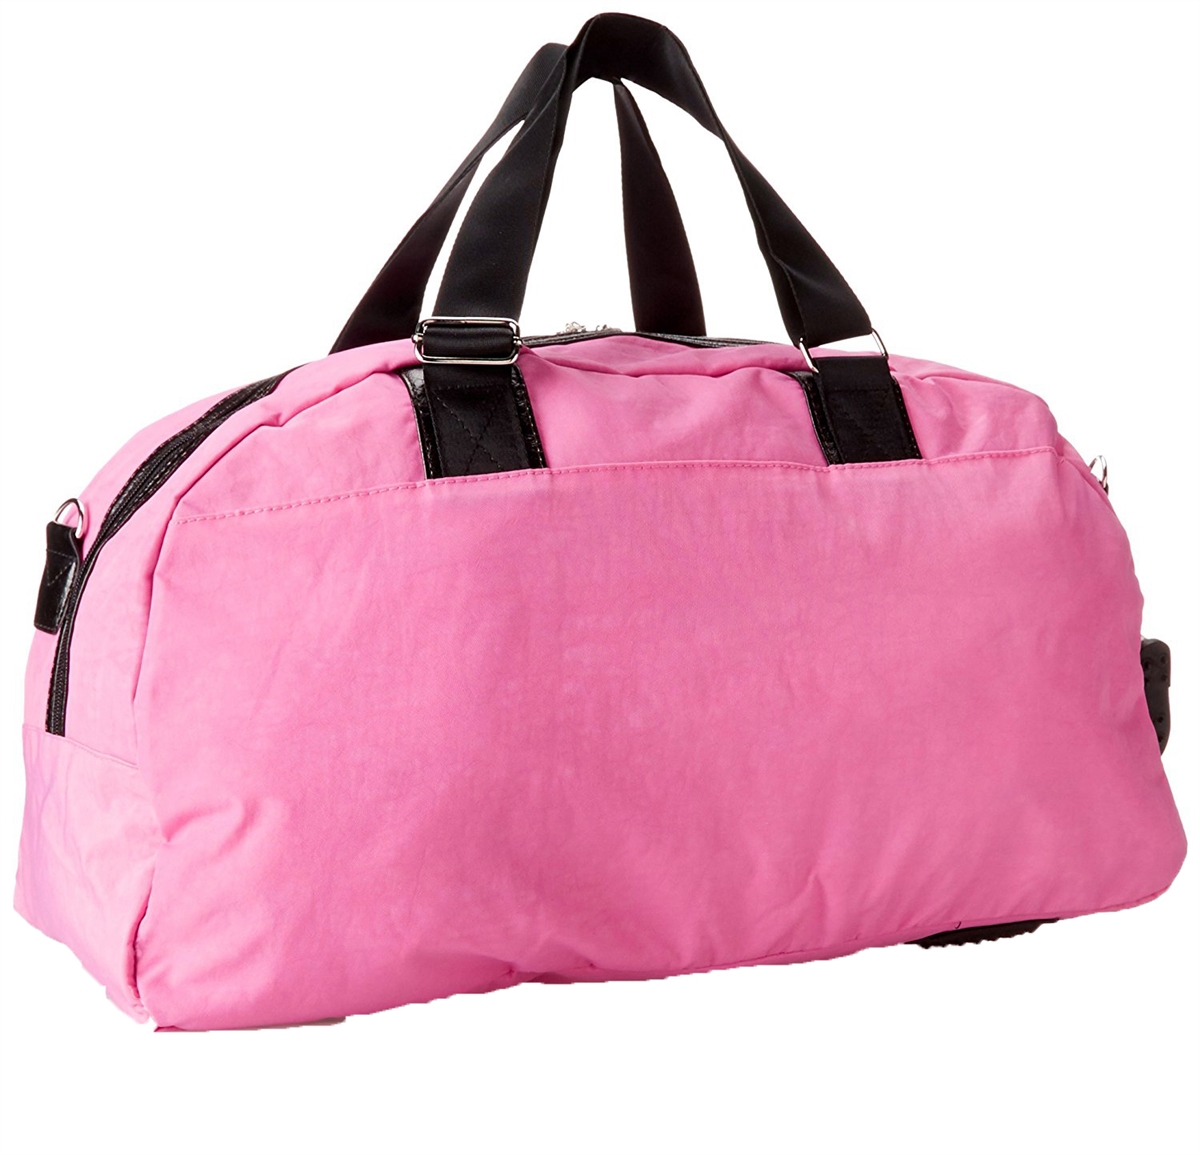 Sydney Love Sport Duffel Large Weekender Travel Bag, Pink Golf